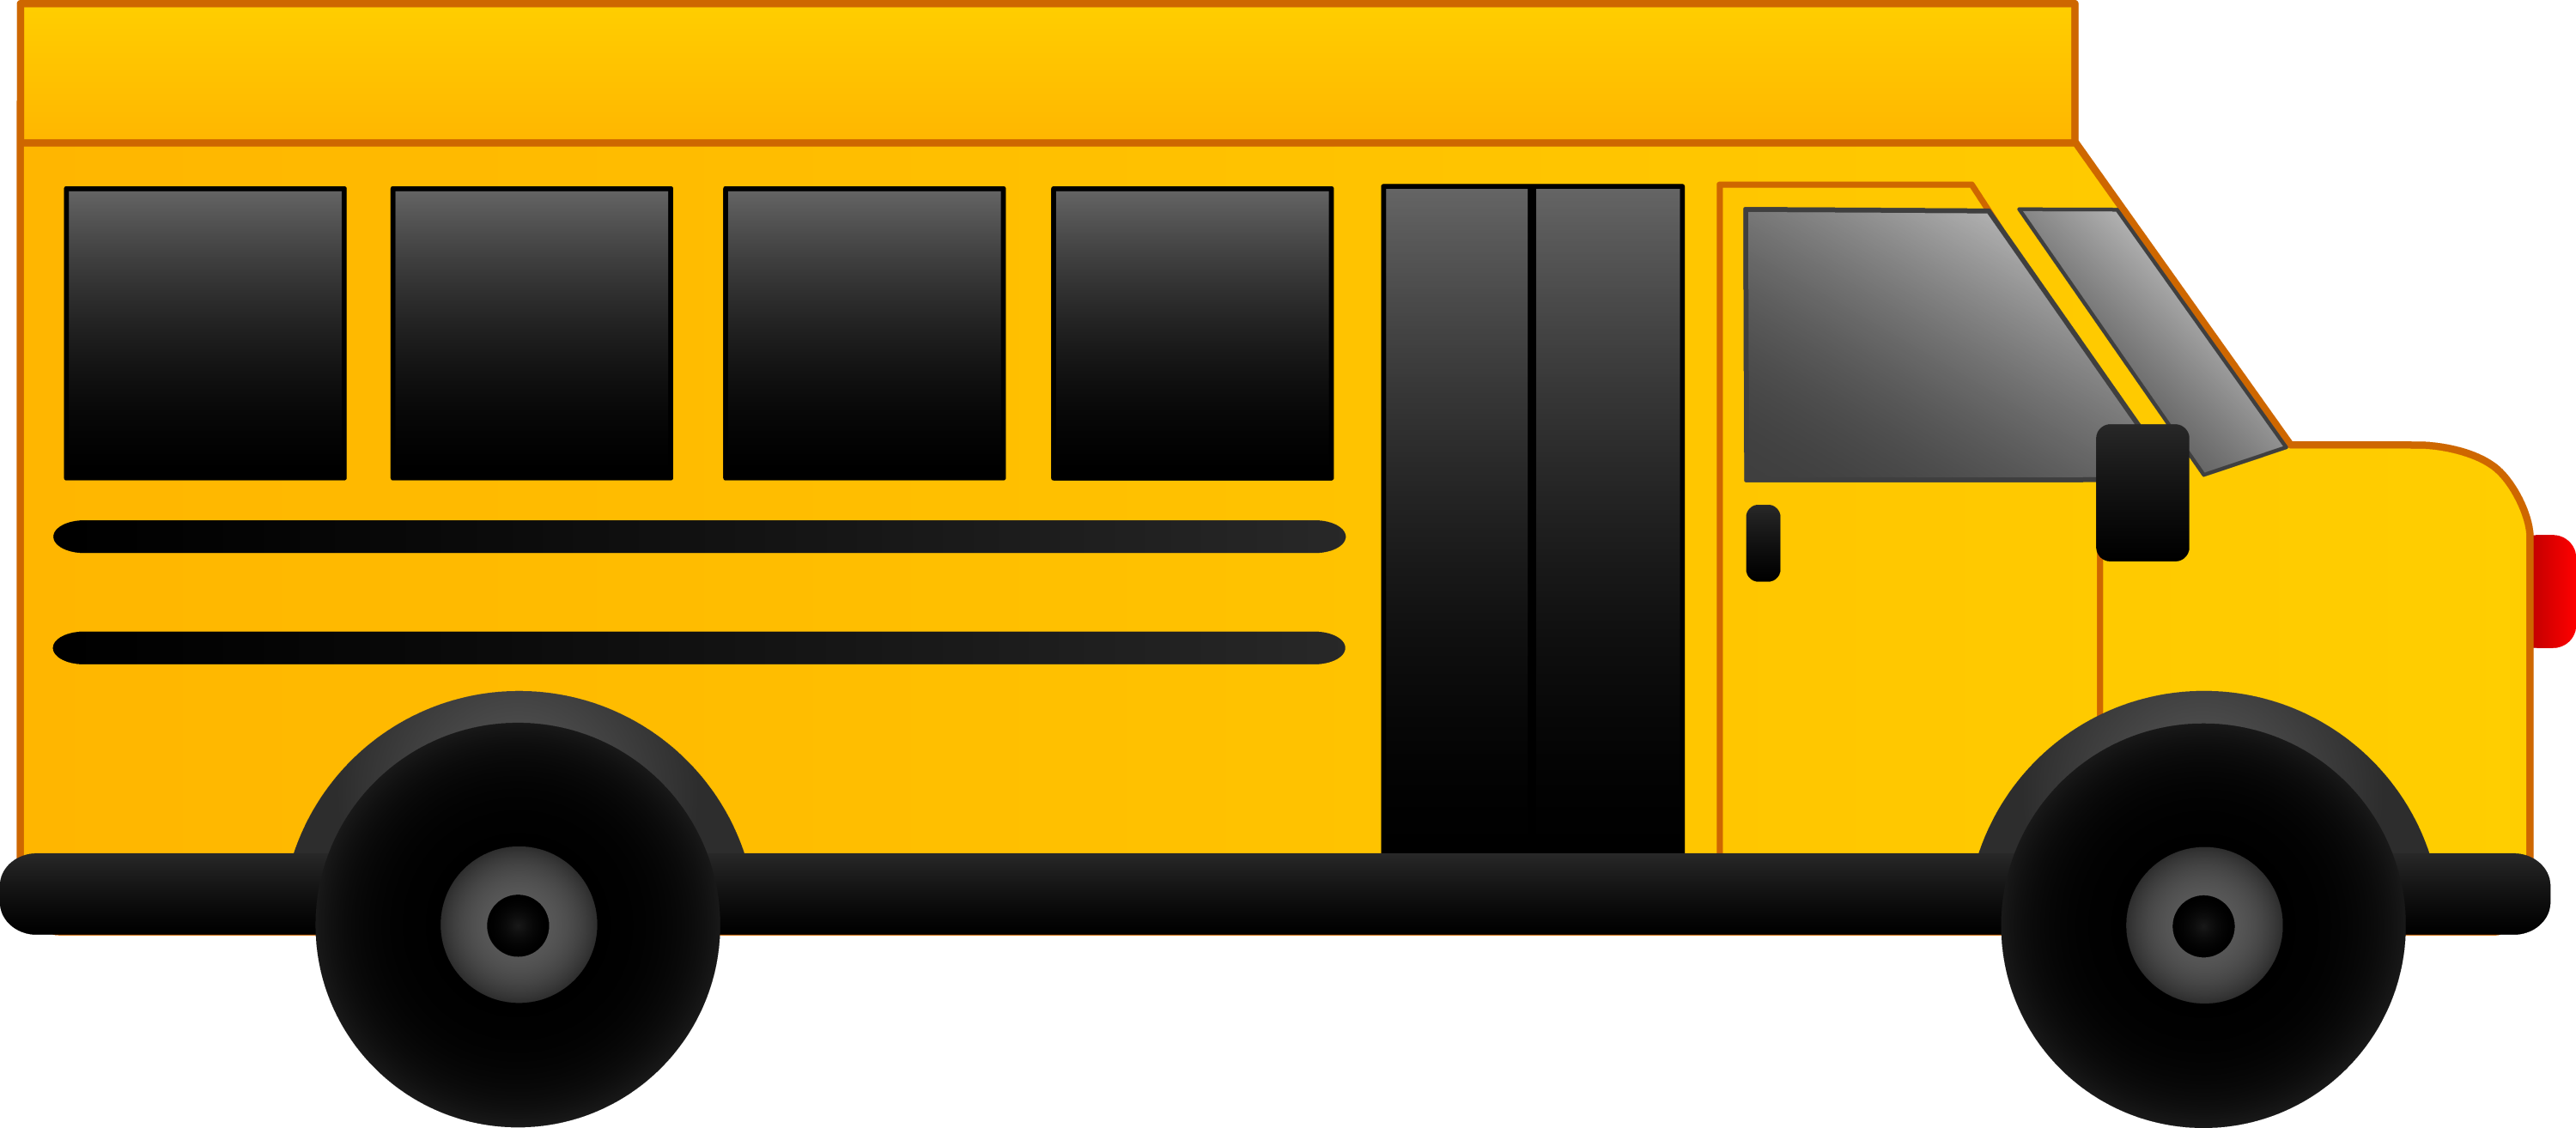 free clipart yellow school bus - photo #1